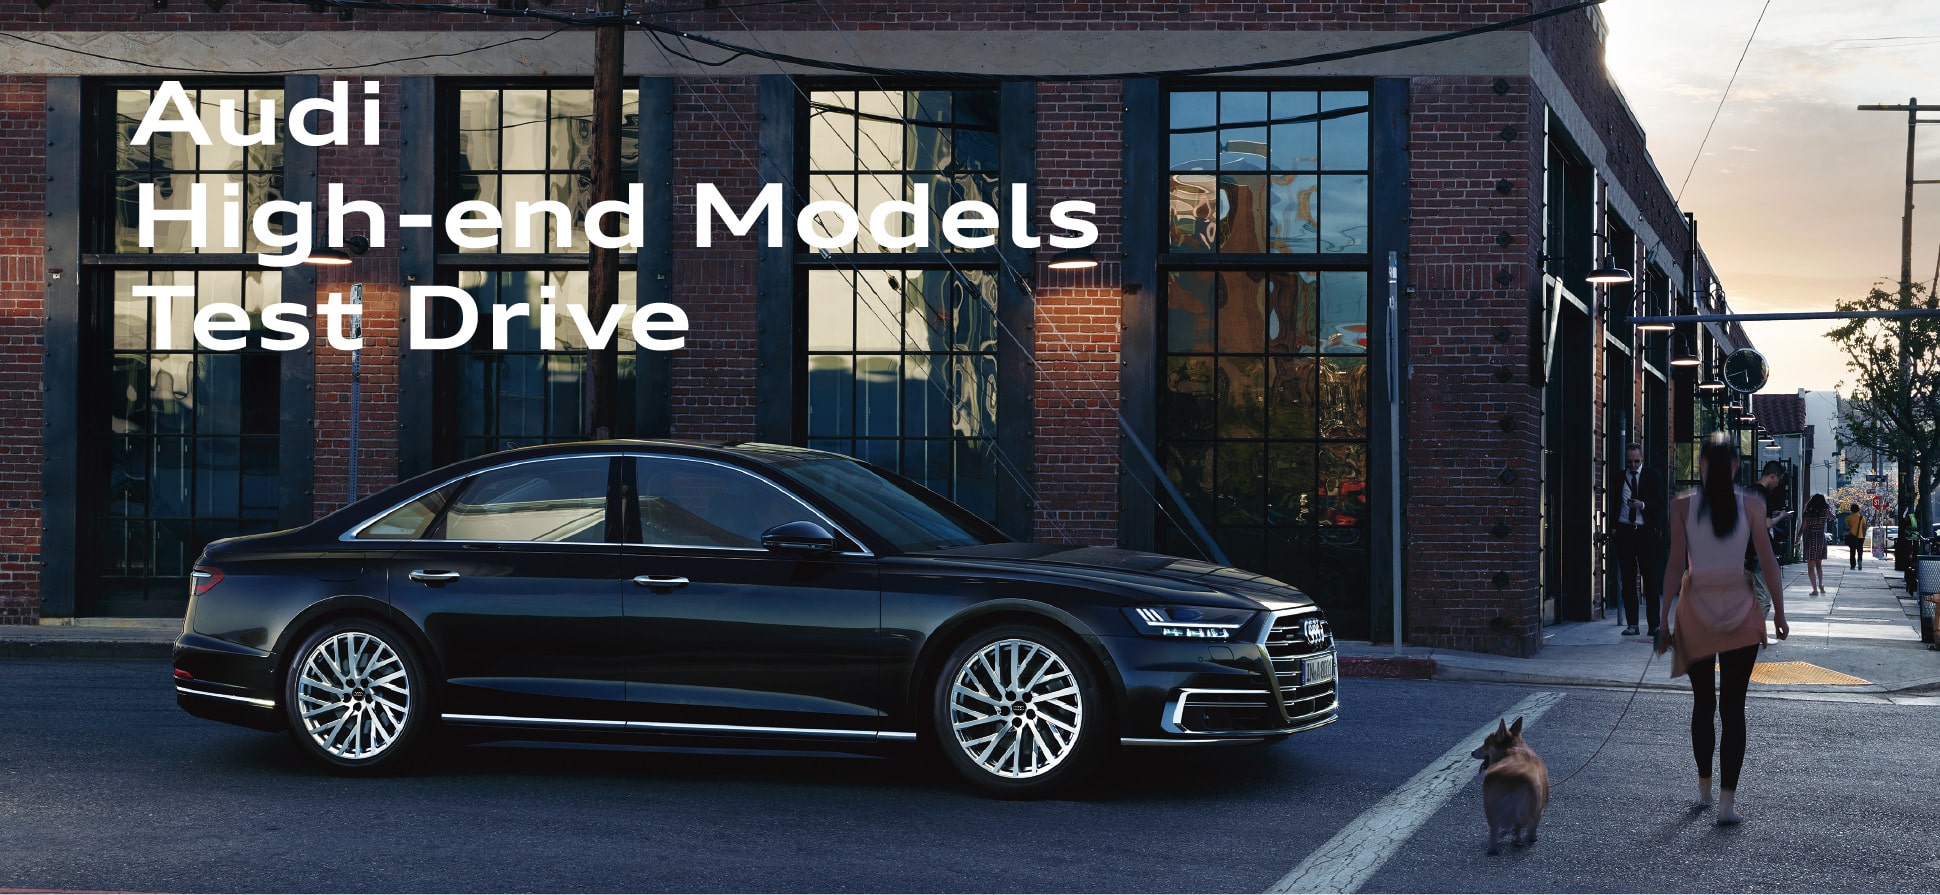 Audi High-end Models Test Drive